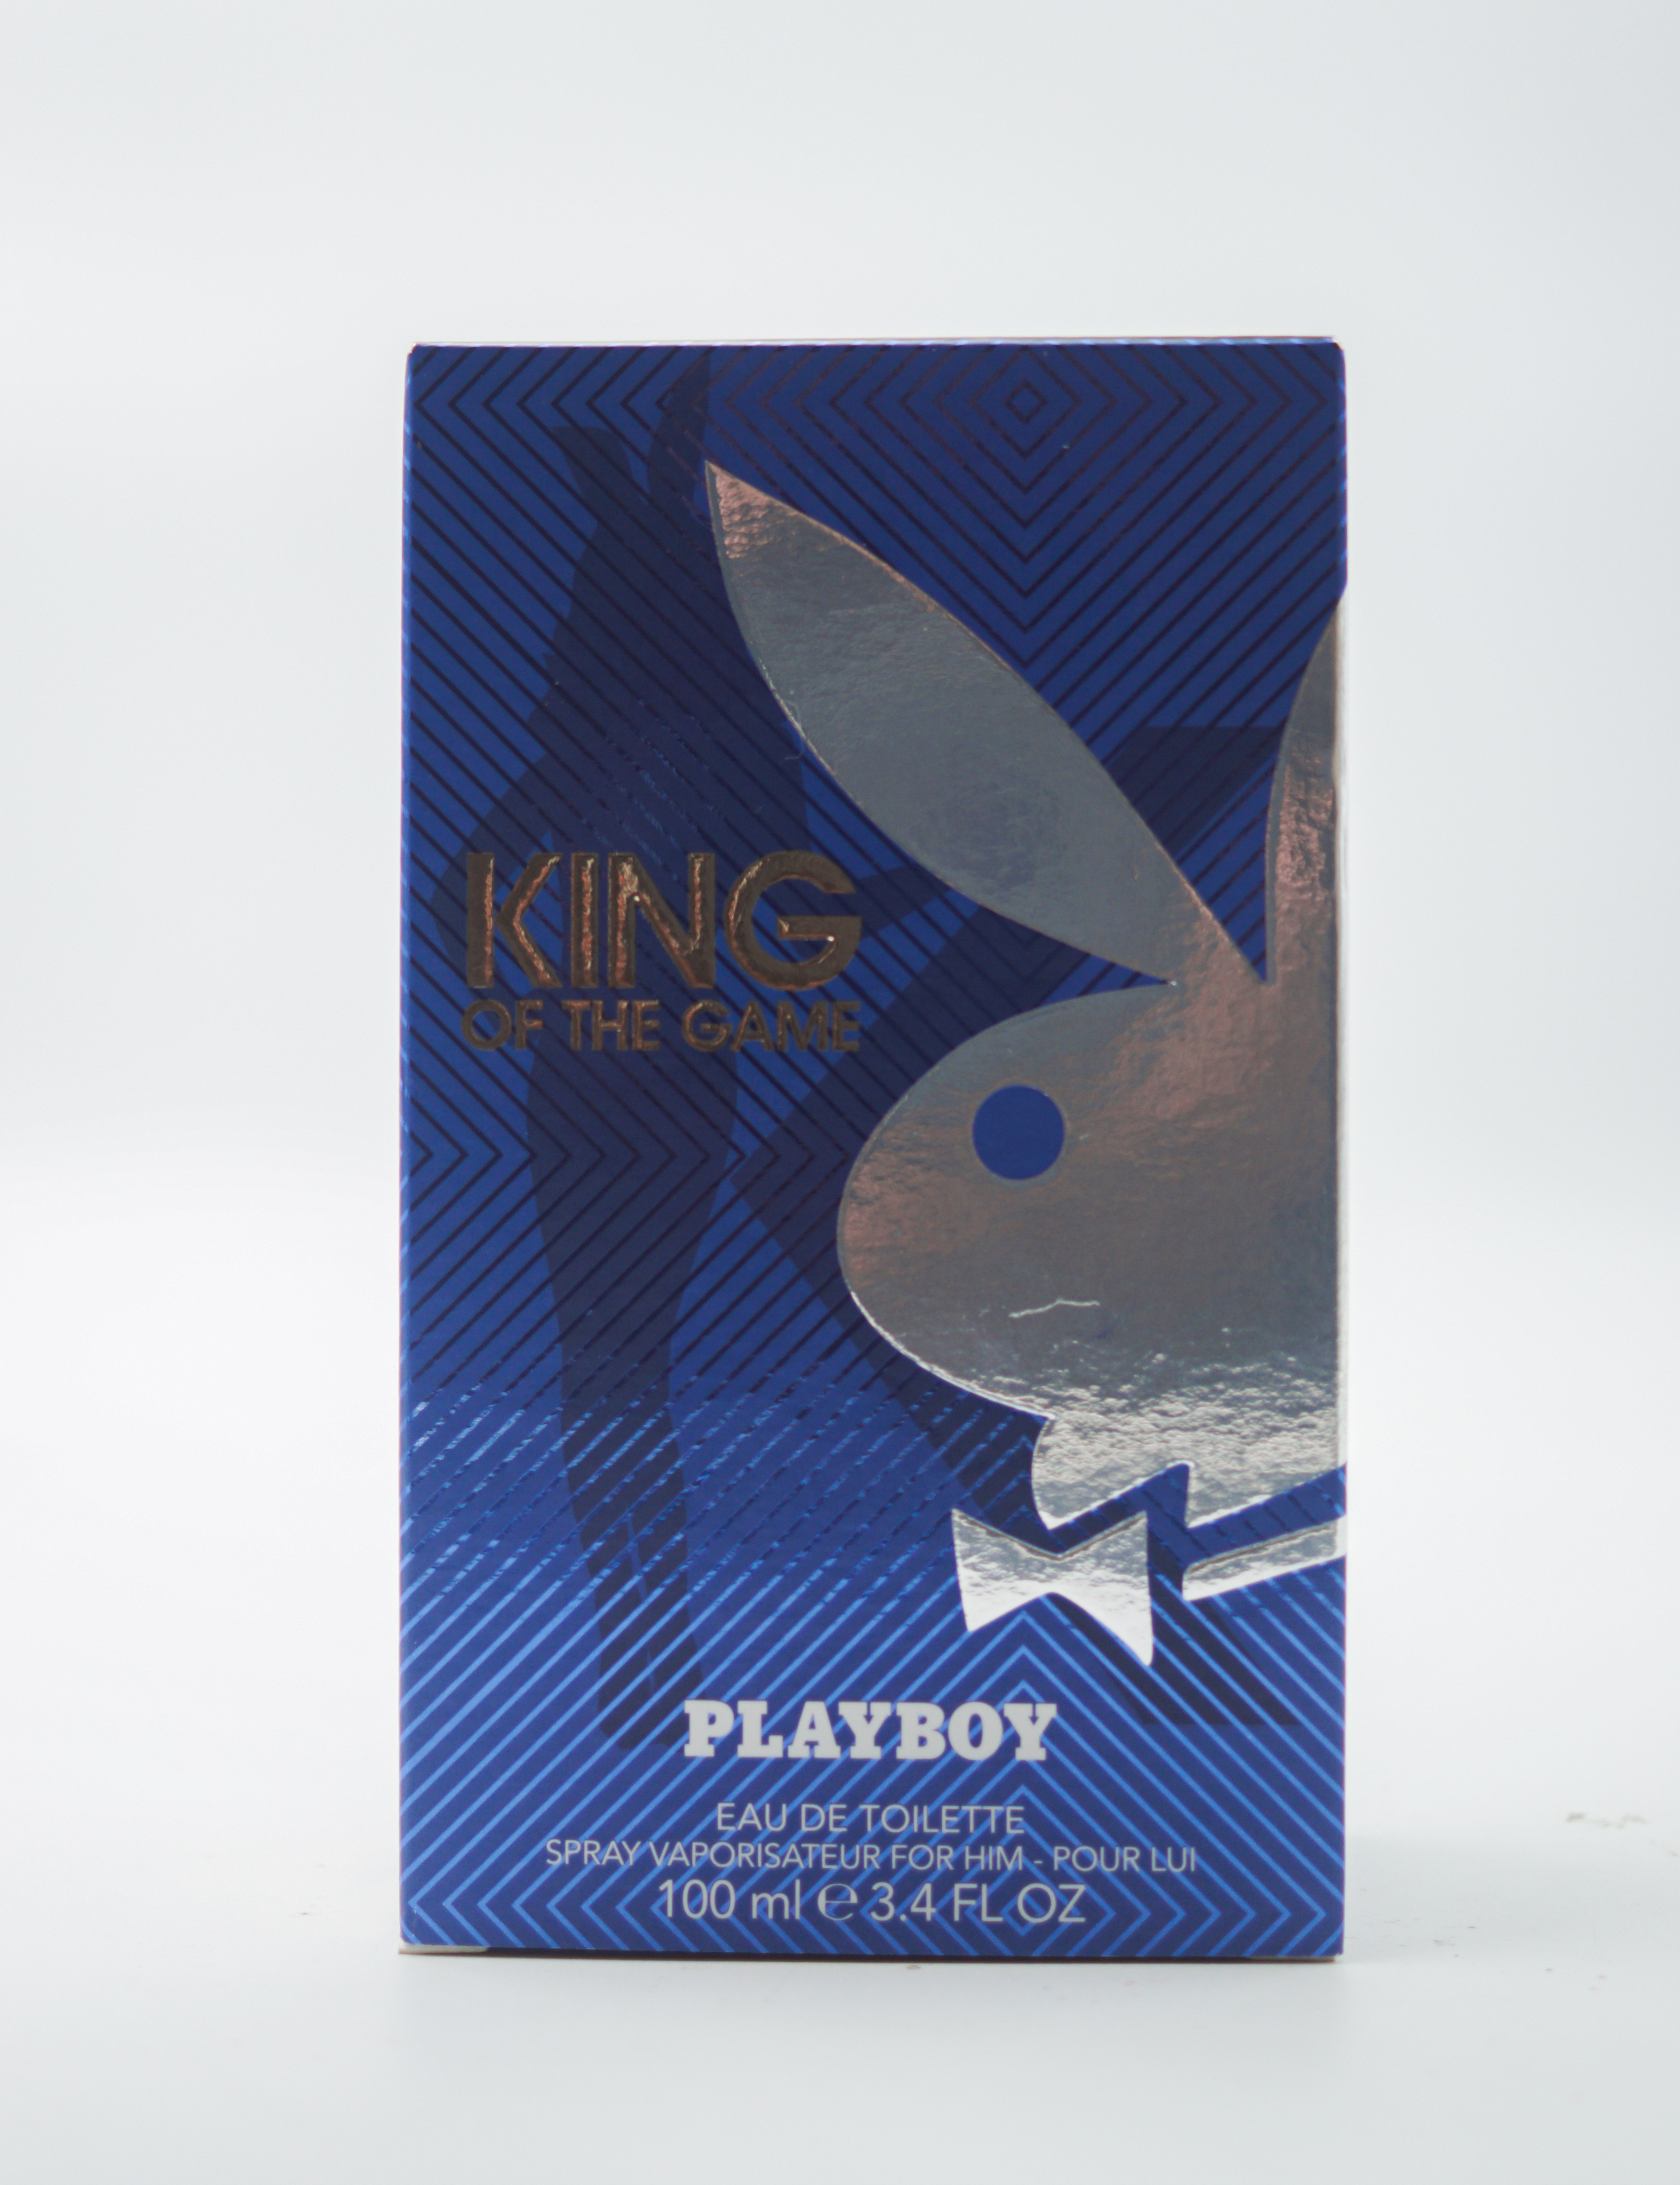 Playboy King Of The Game 100 ml Eau De Toilette Vaporisateur Spray Perfume For Men SKU 96794